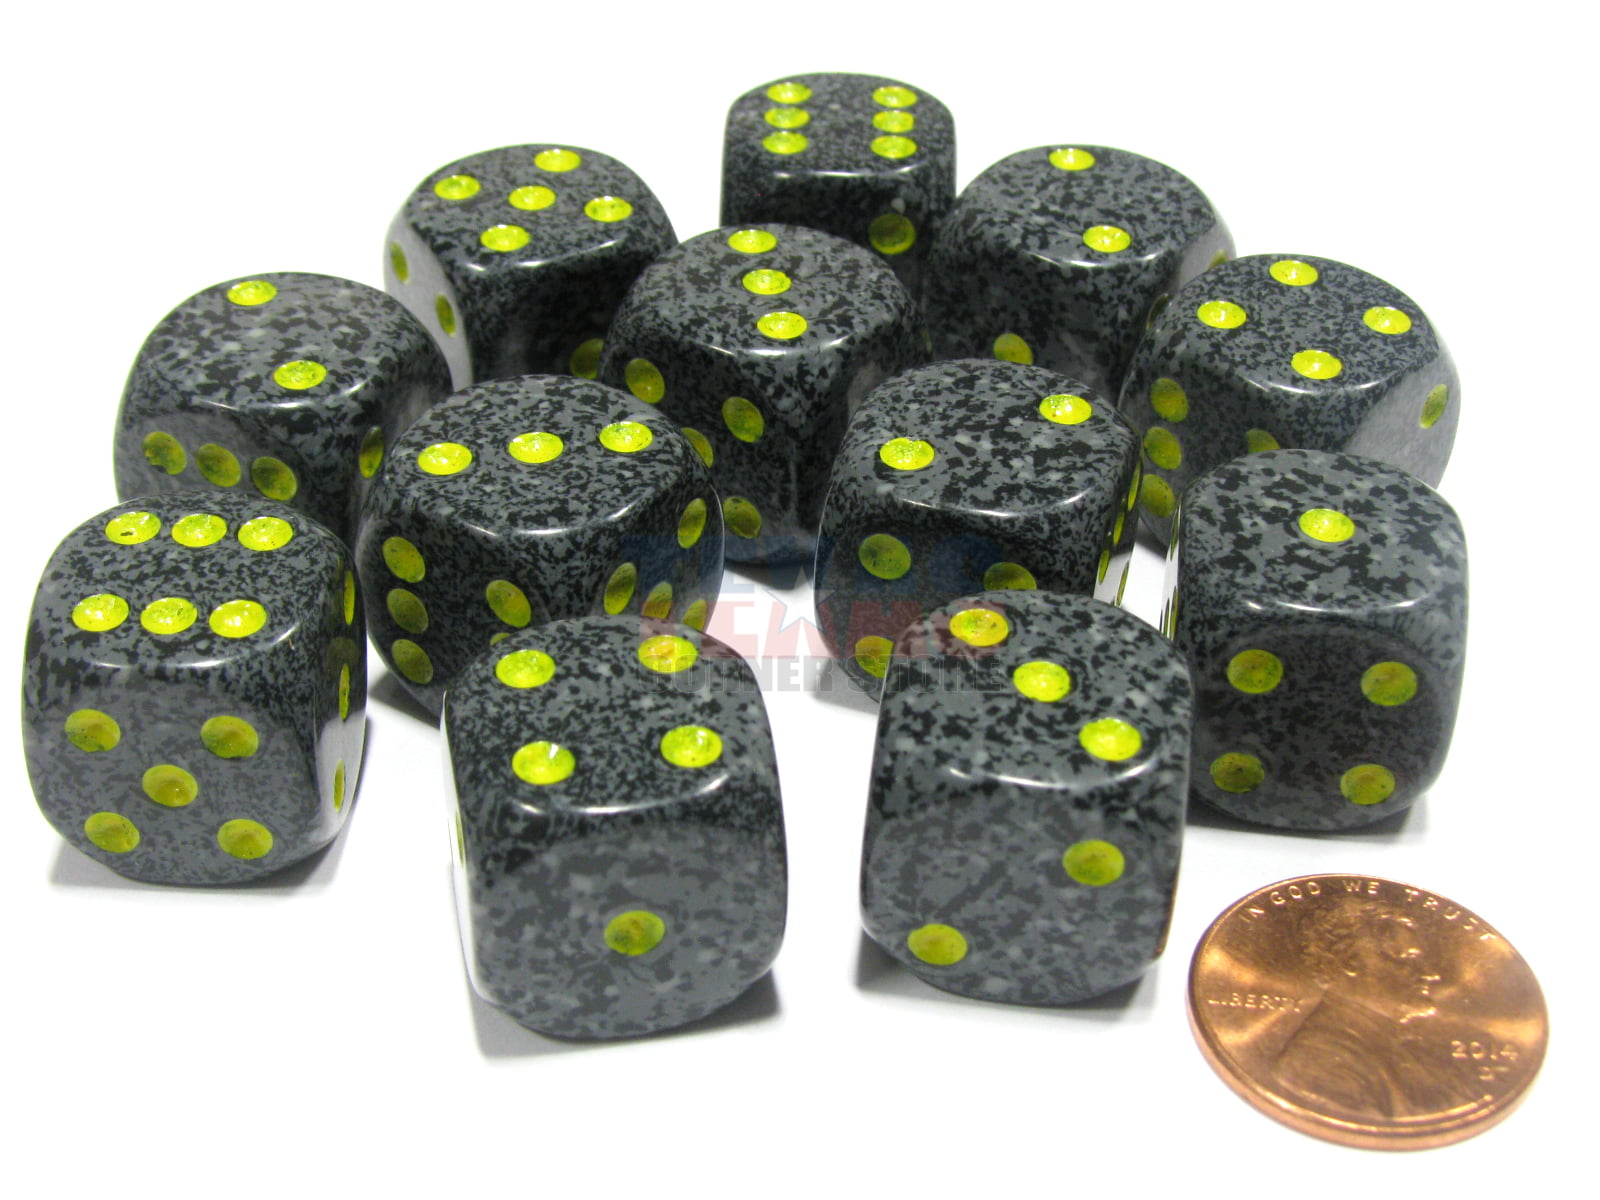 Chessex Speckled 12mm dice set Urban Camo 36 pieces dice set 